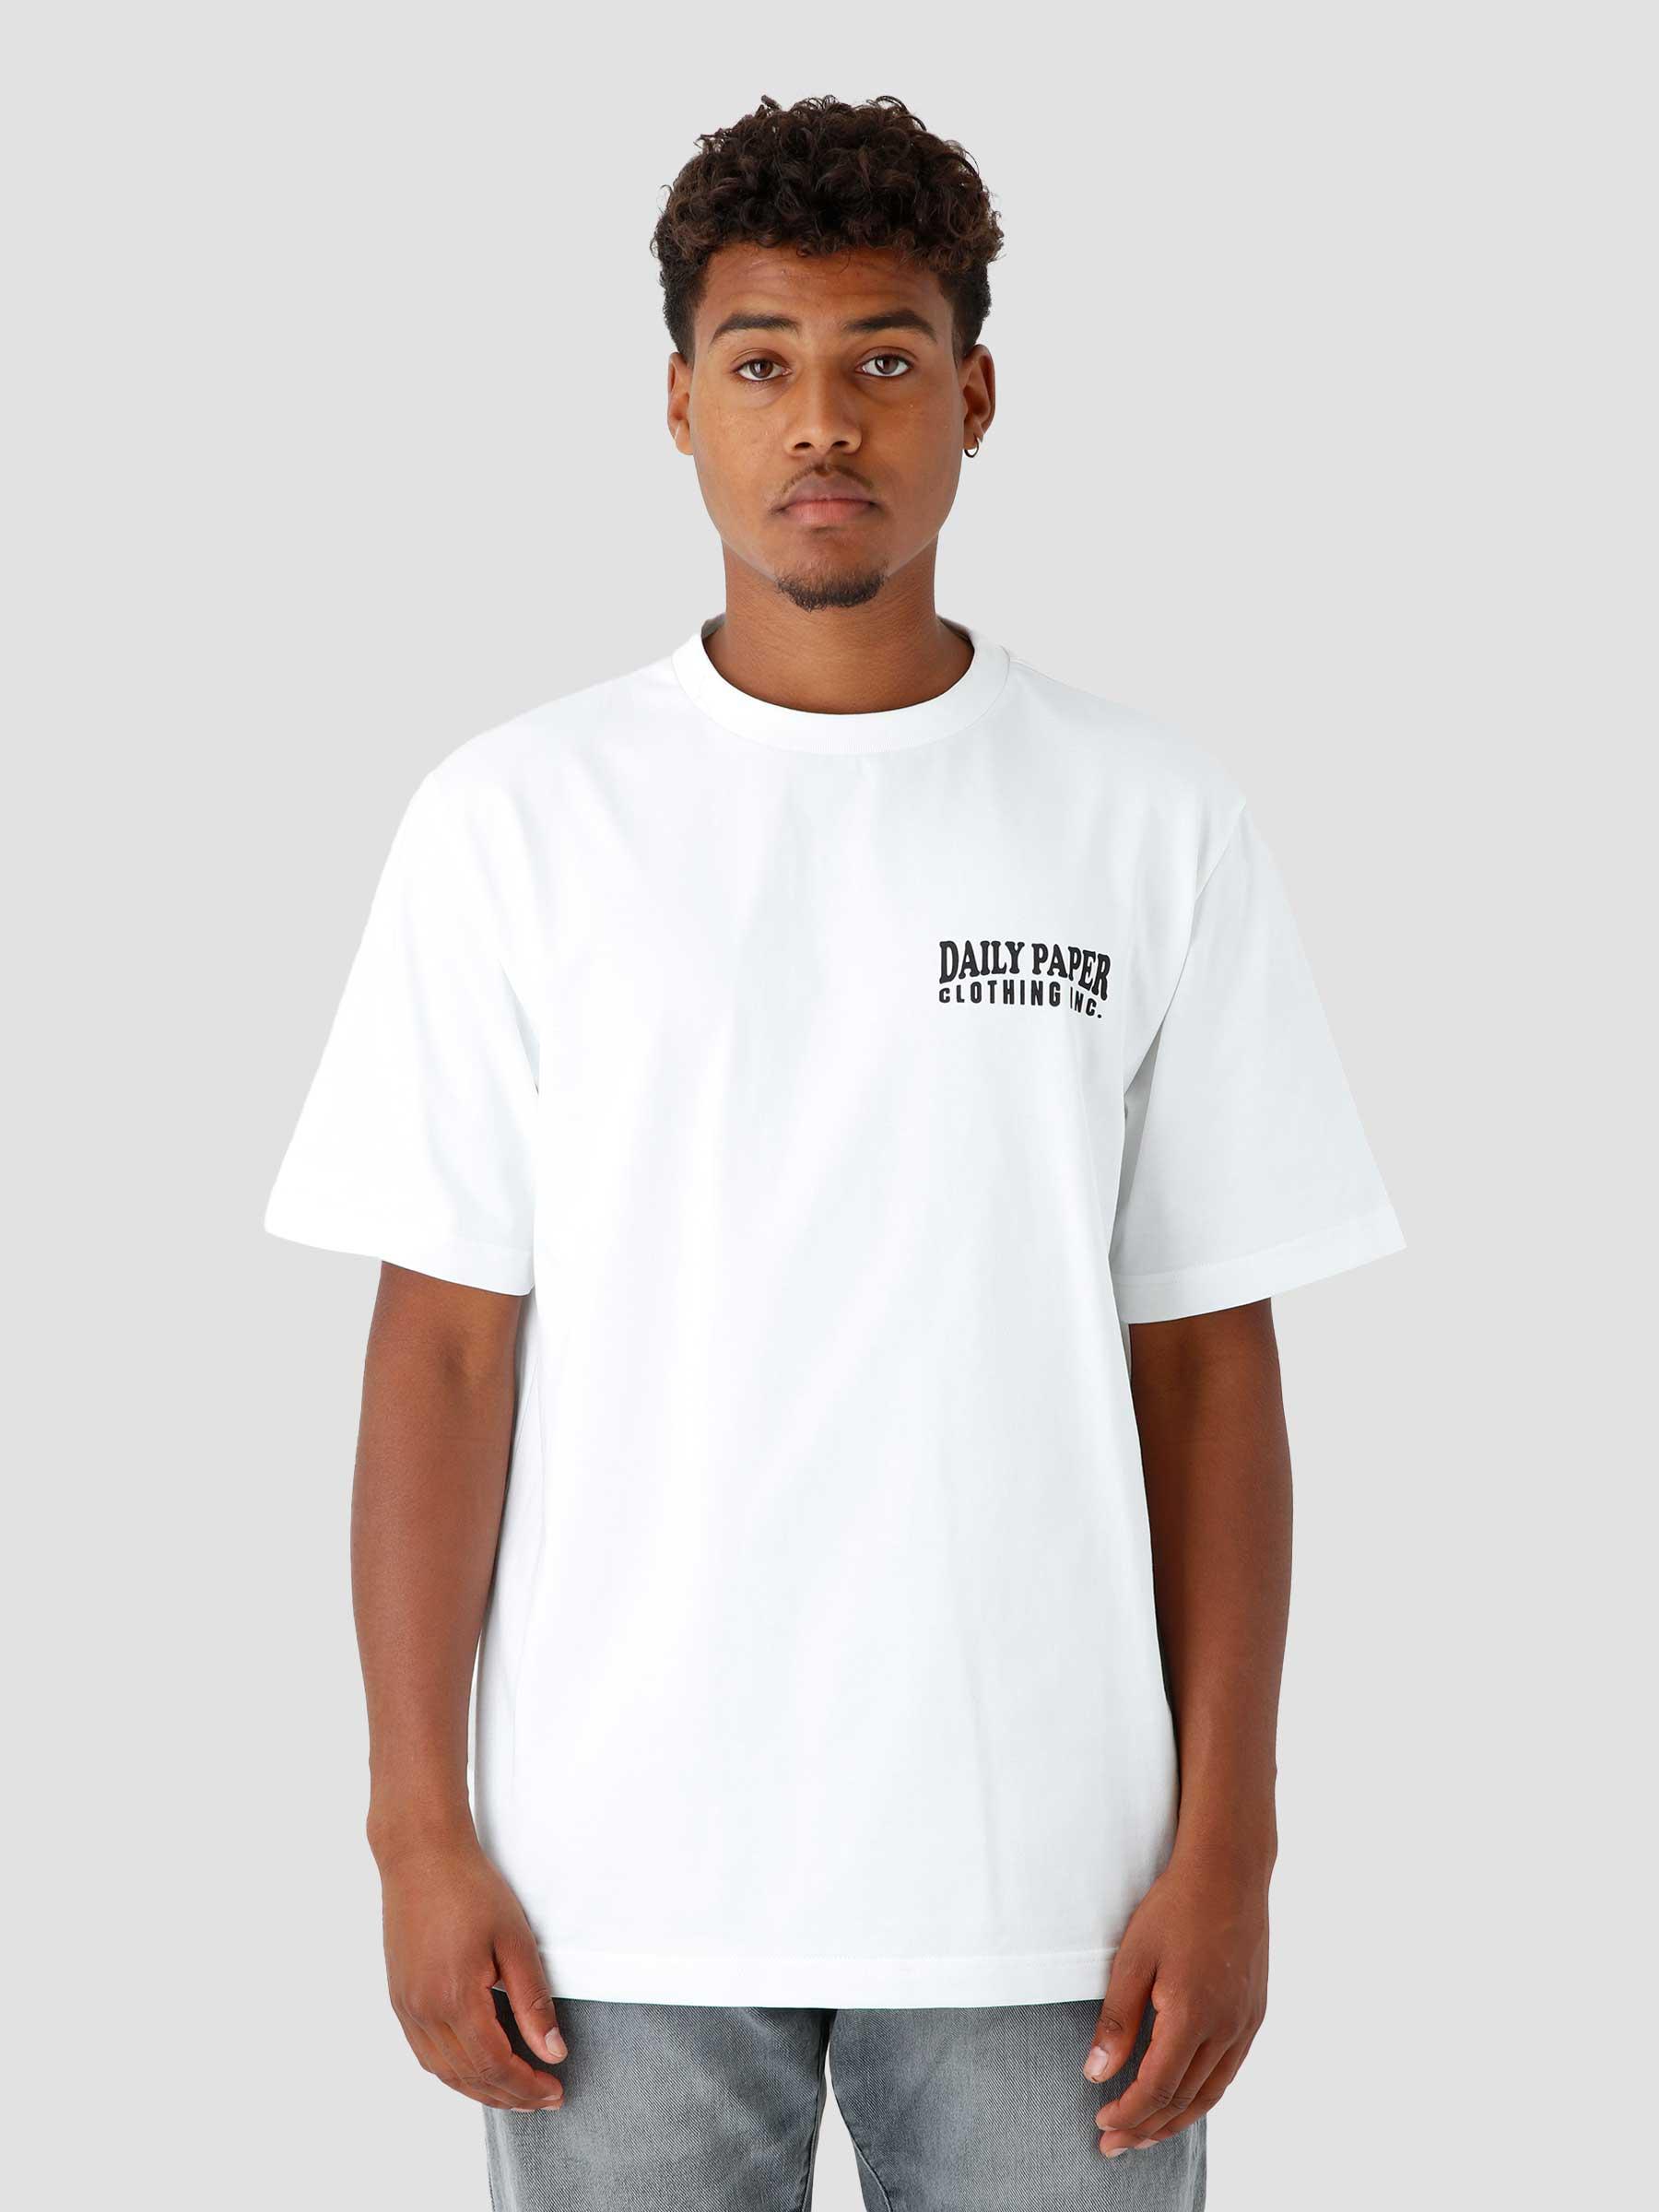 Nedeem T-shirt White 2221020